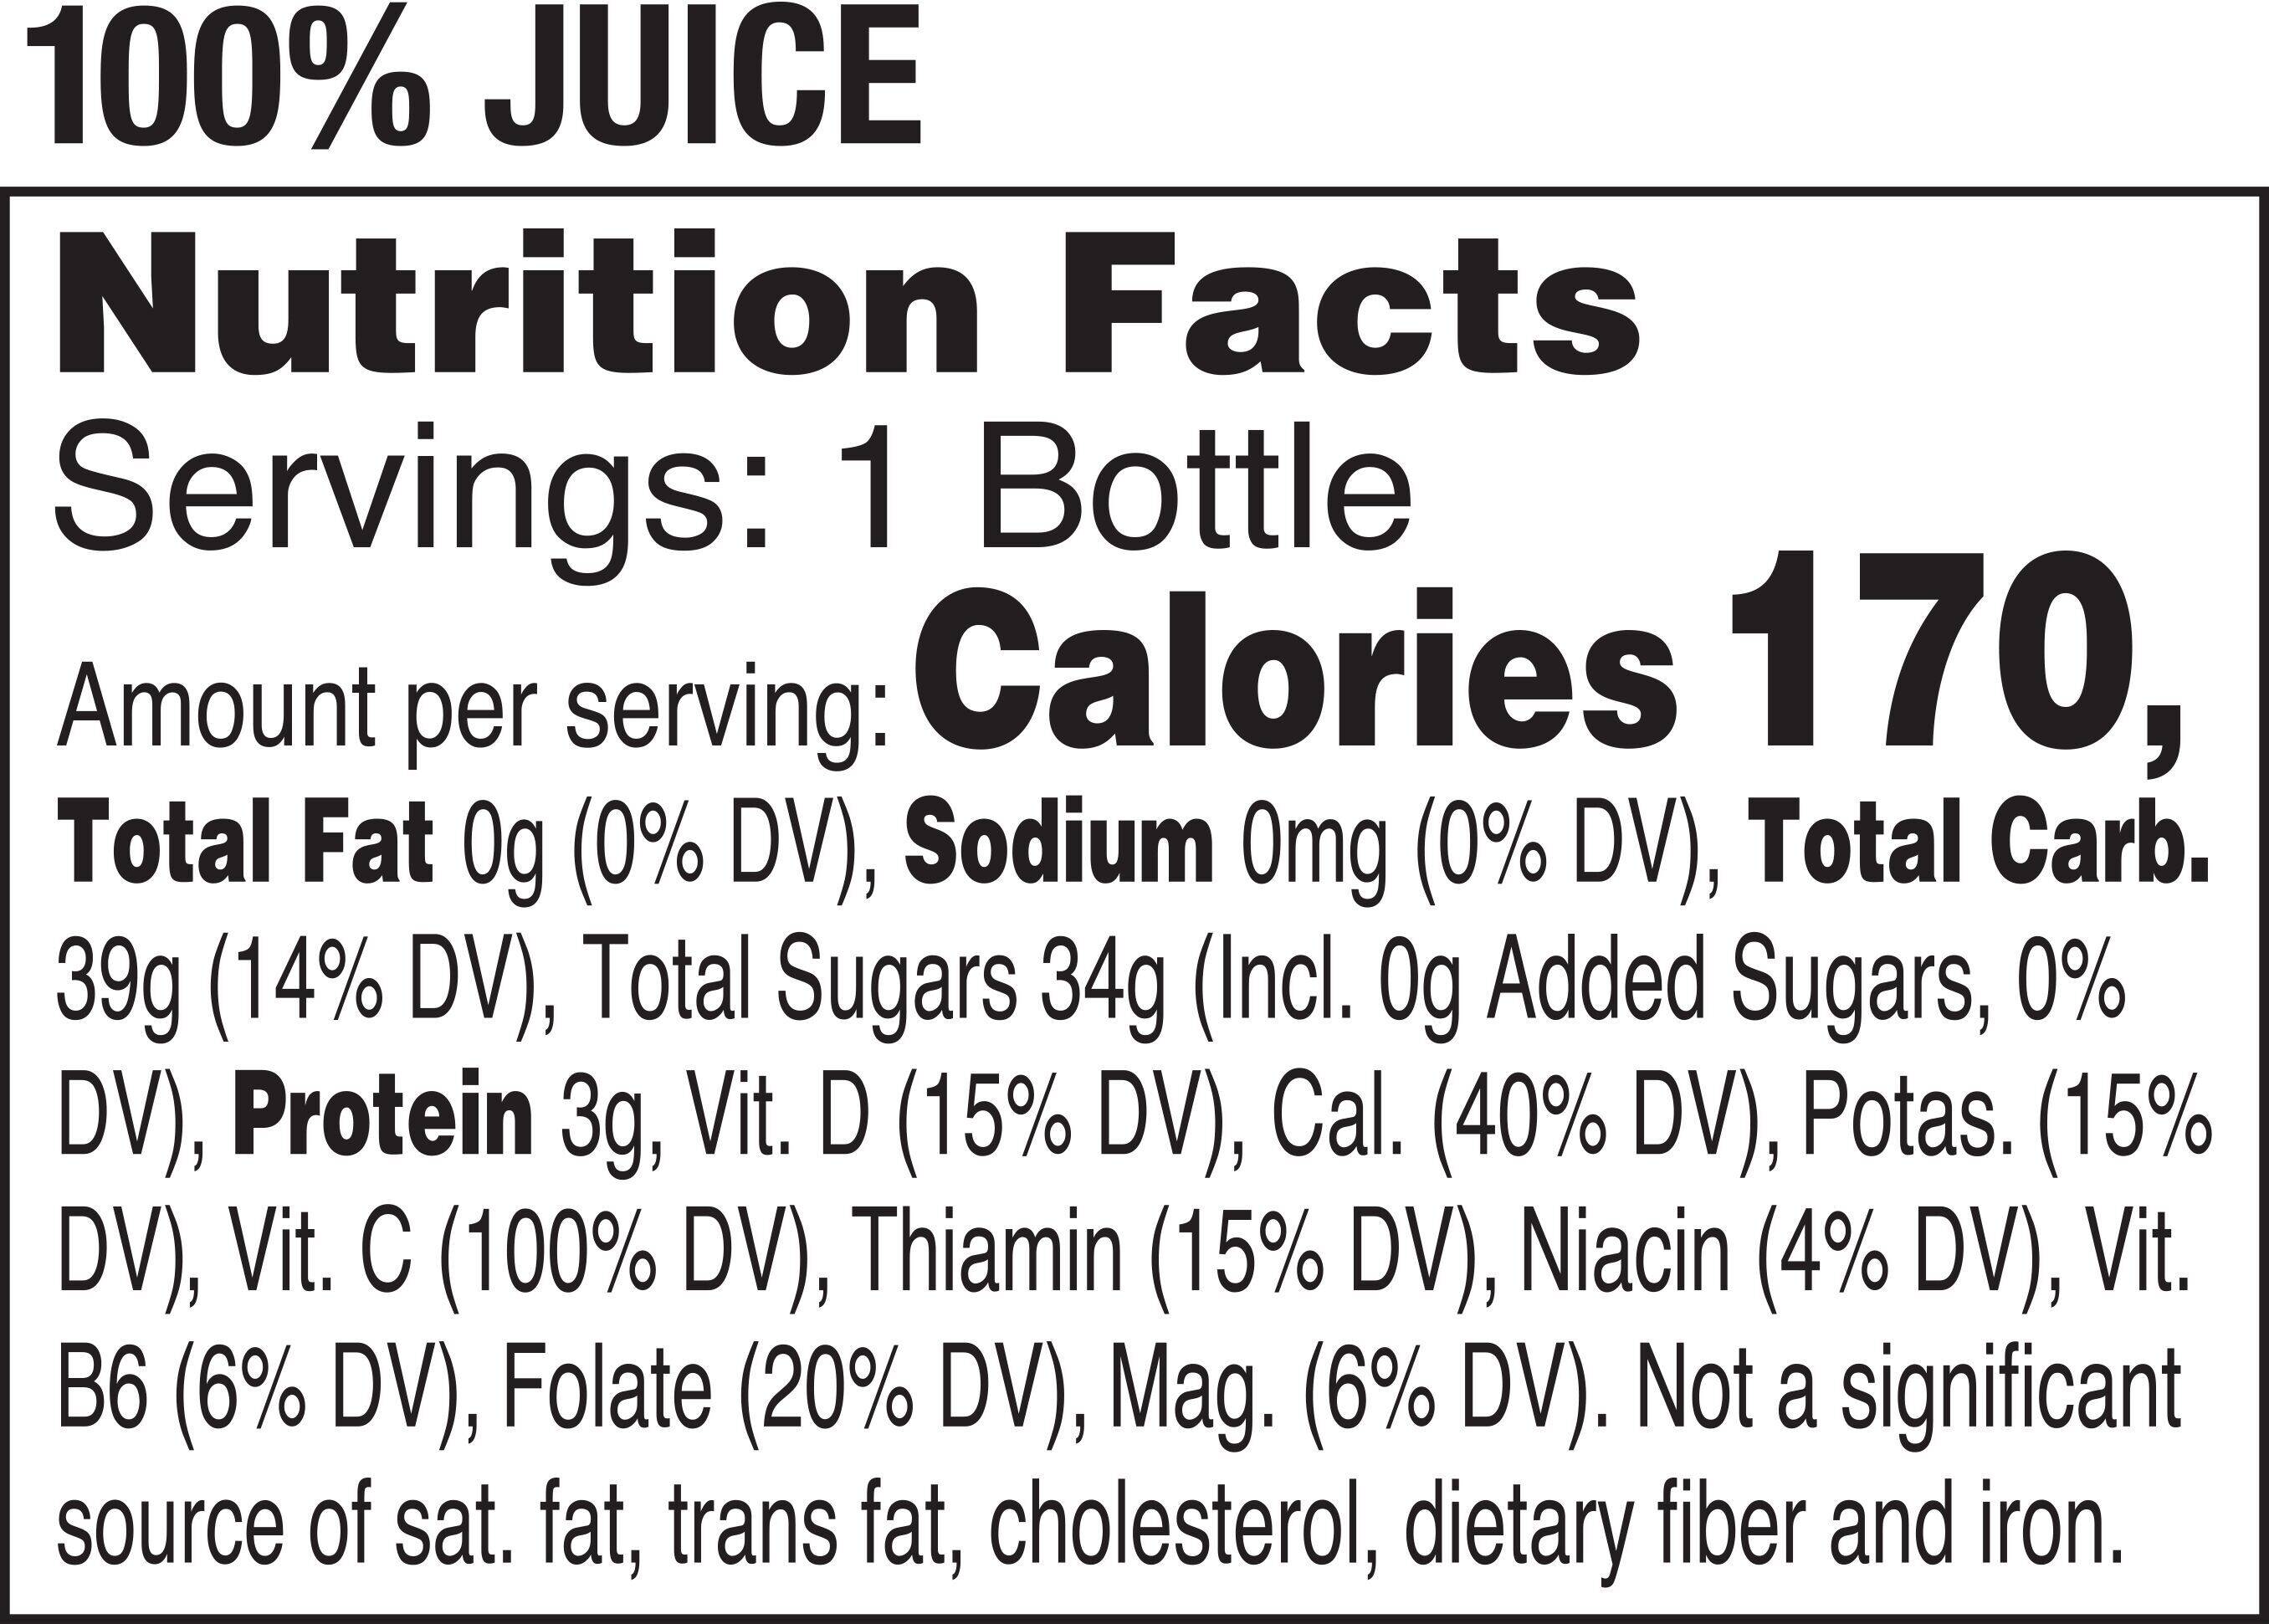 Image describing nutrition information for product Tropicana Pure Premium Calcium Orange Juice